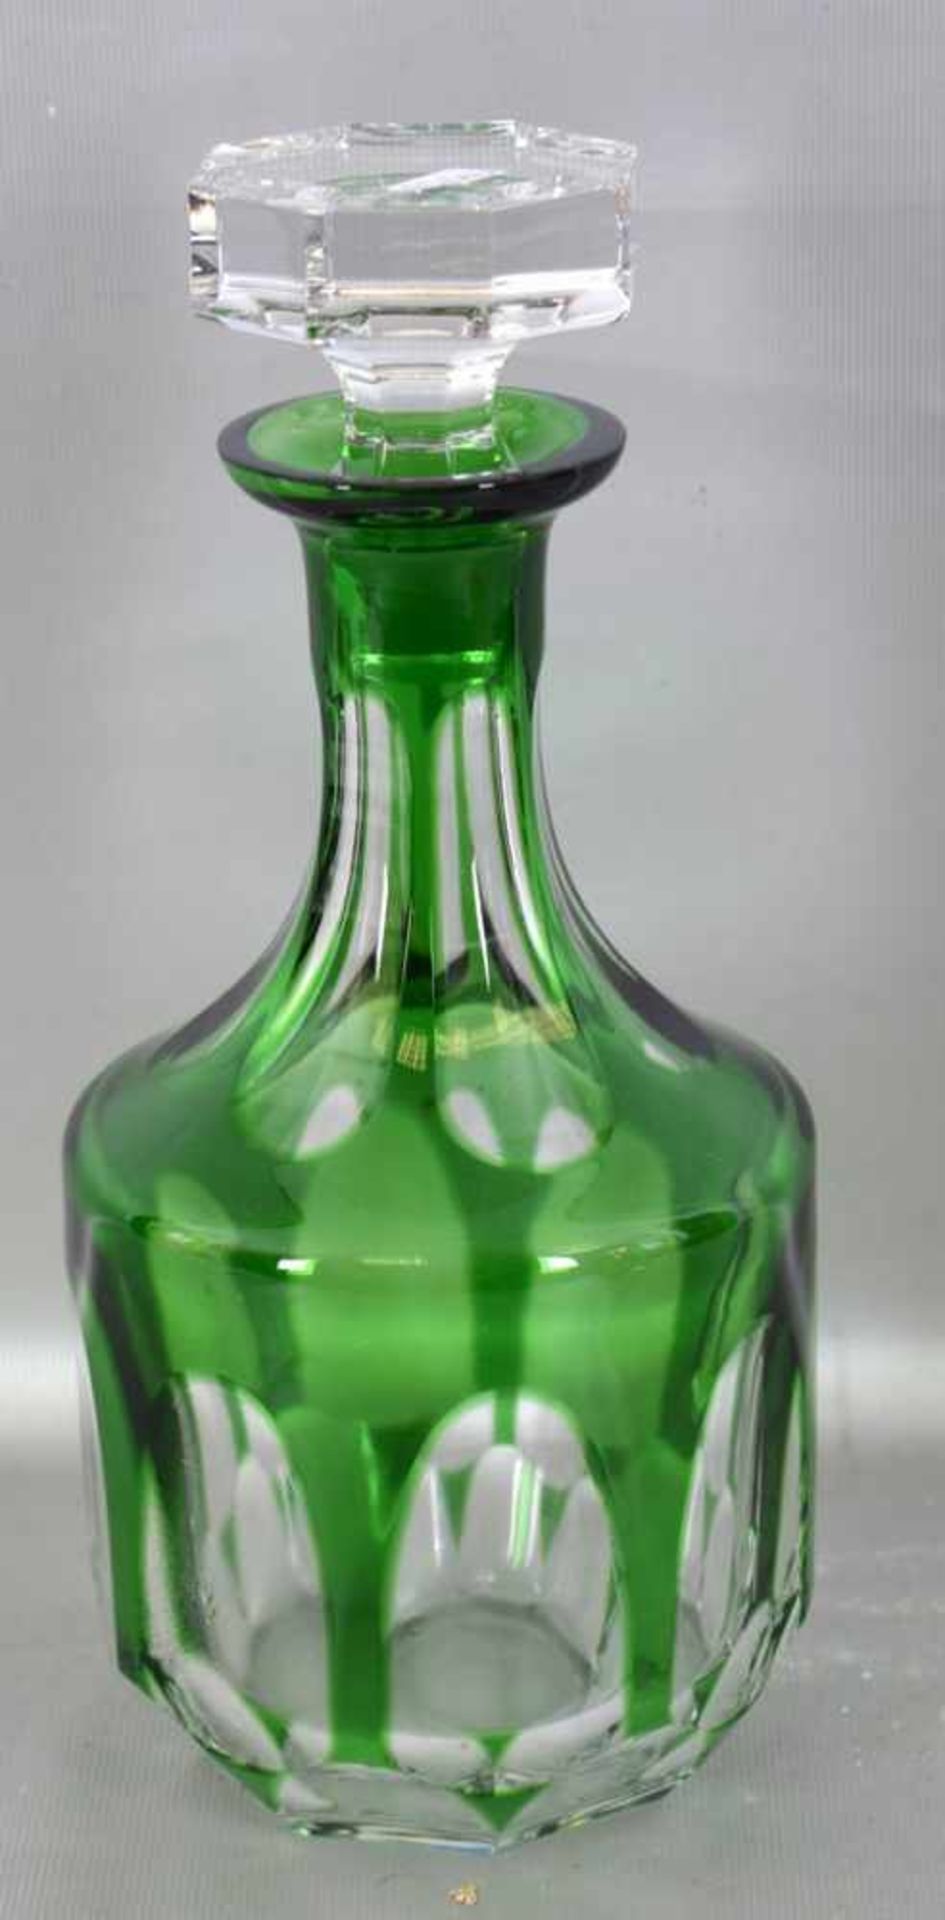 Karaffe farbl. Kristallglas, geschliffen verziert, mit grünem Überfang, H 24 cm